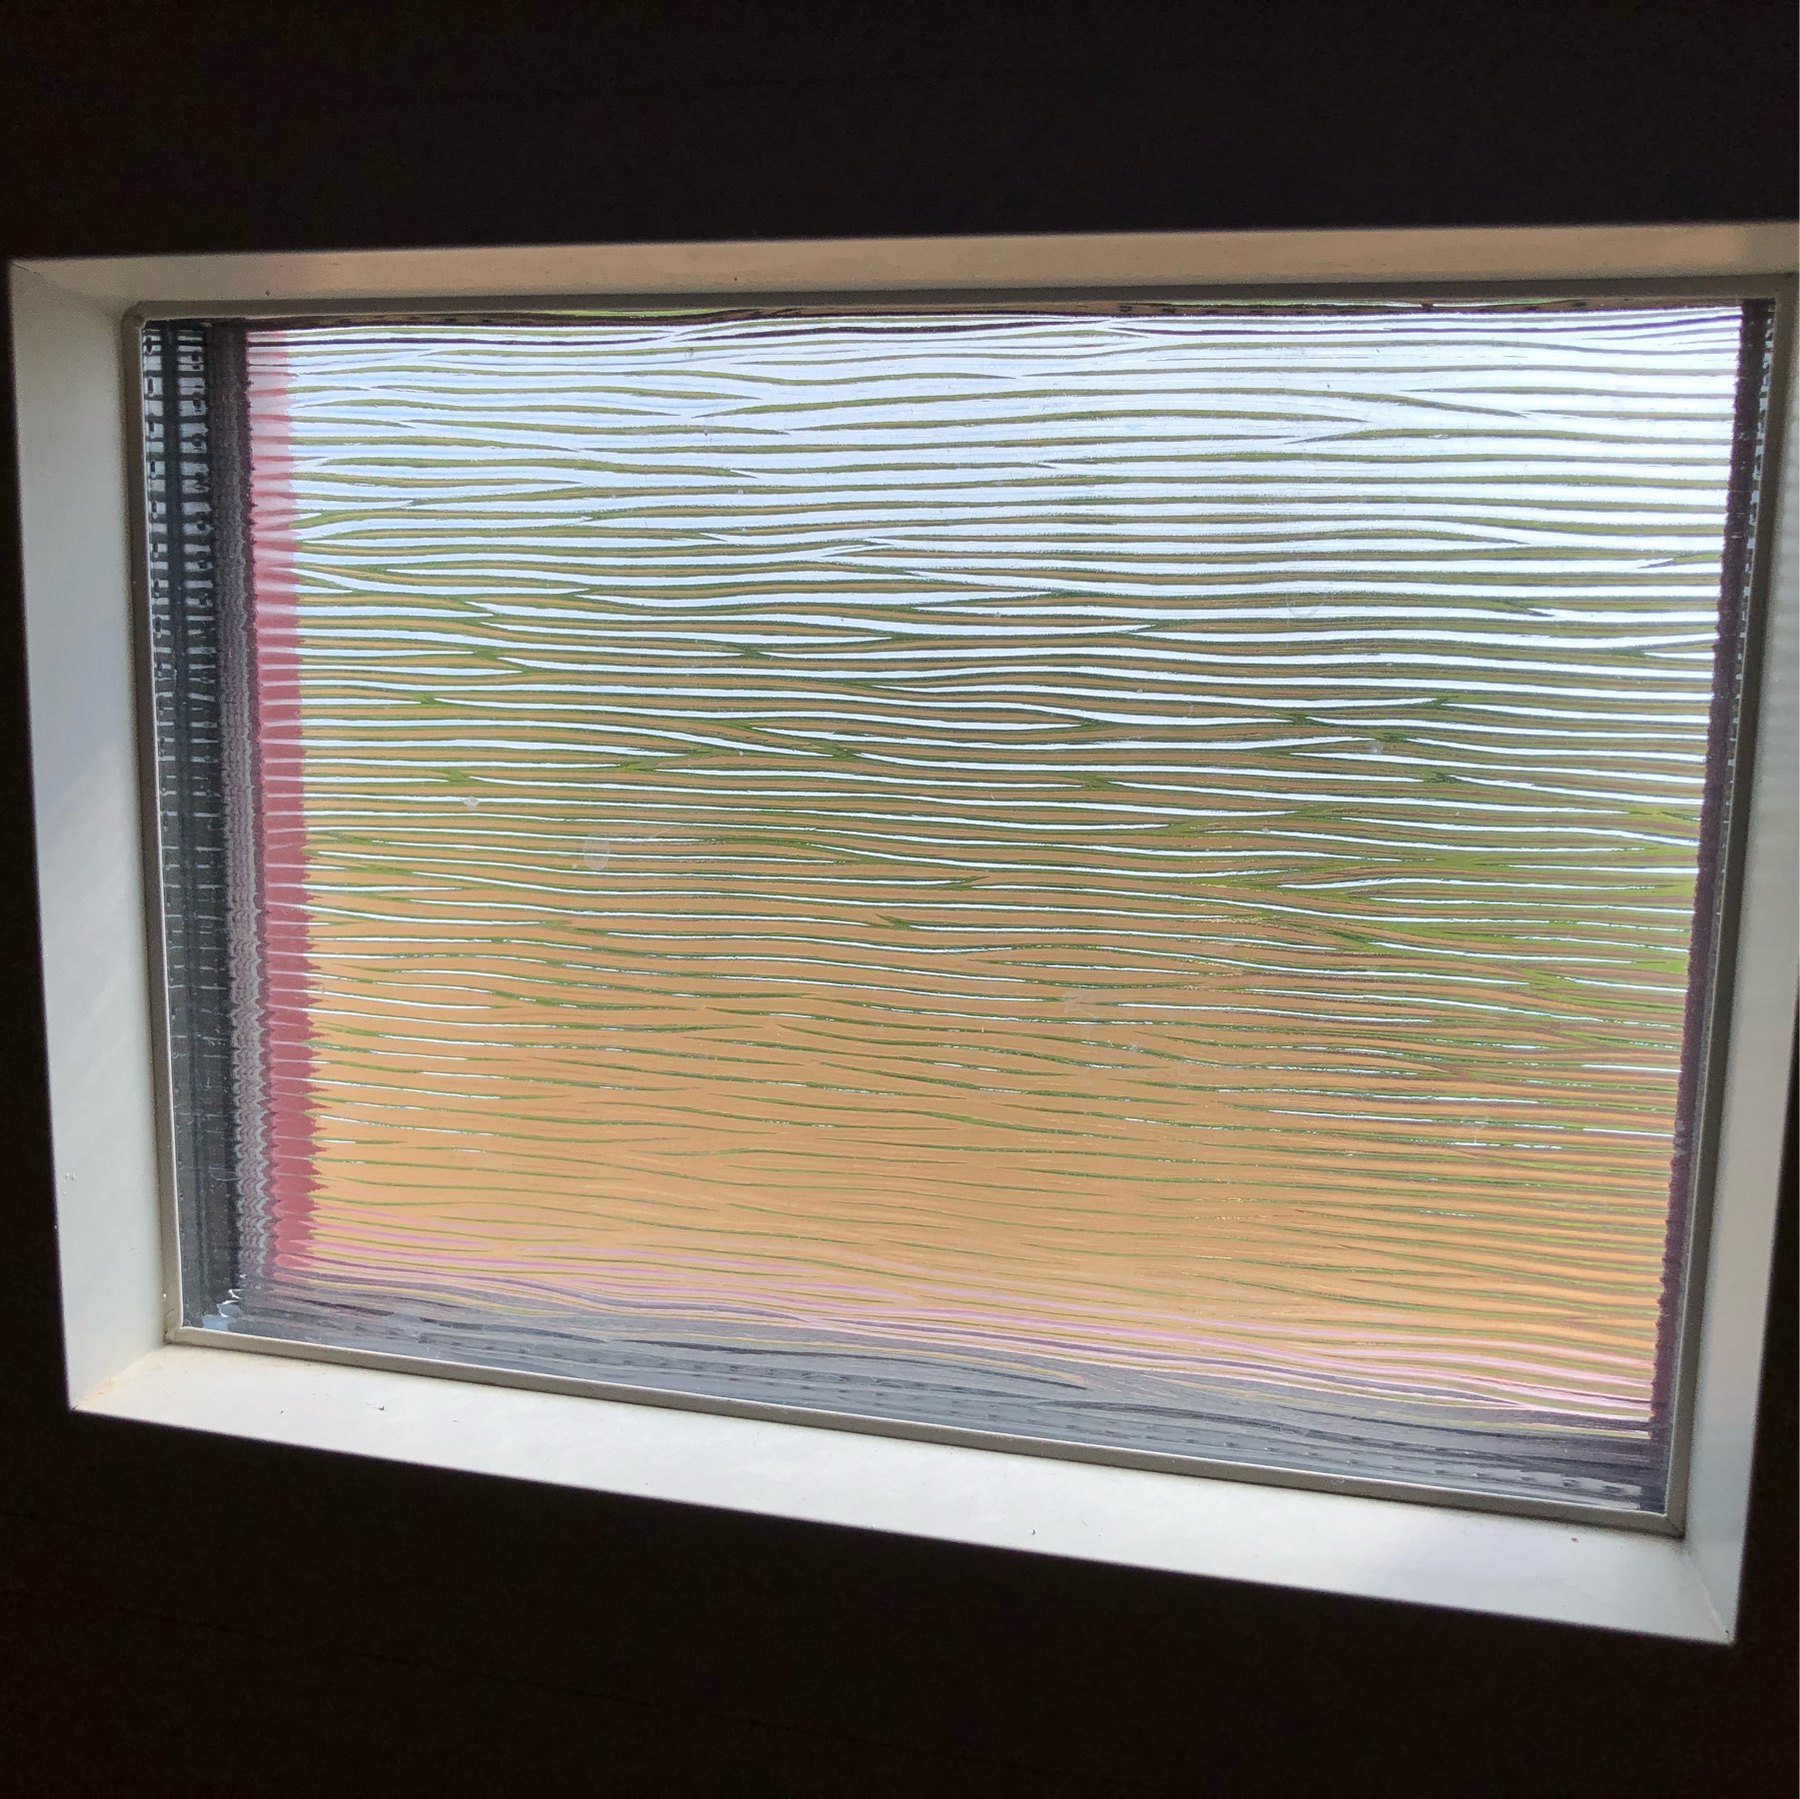 small window with wavy, horizontal lines